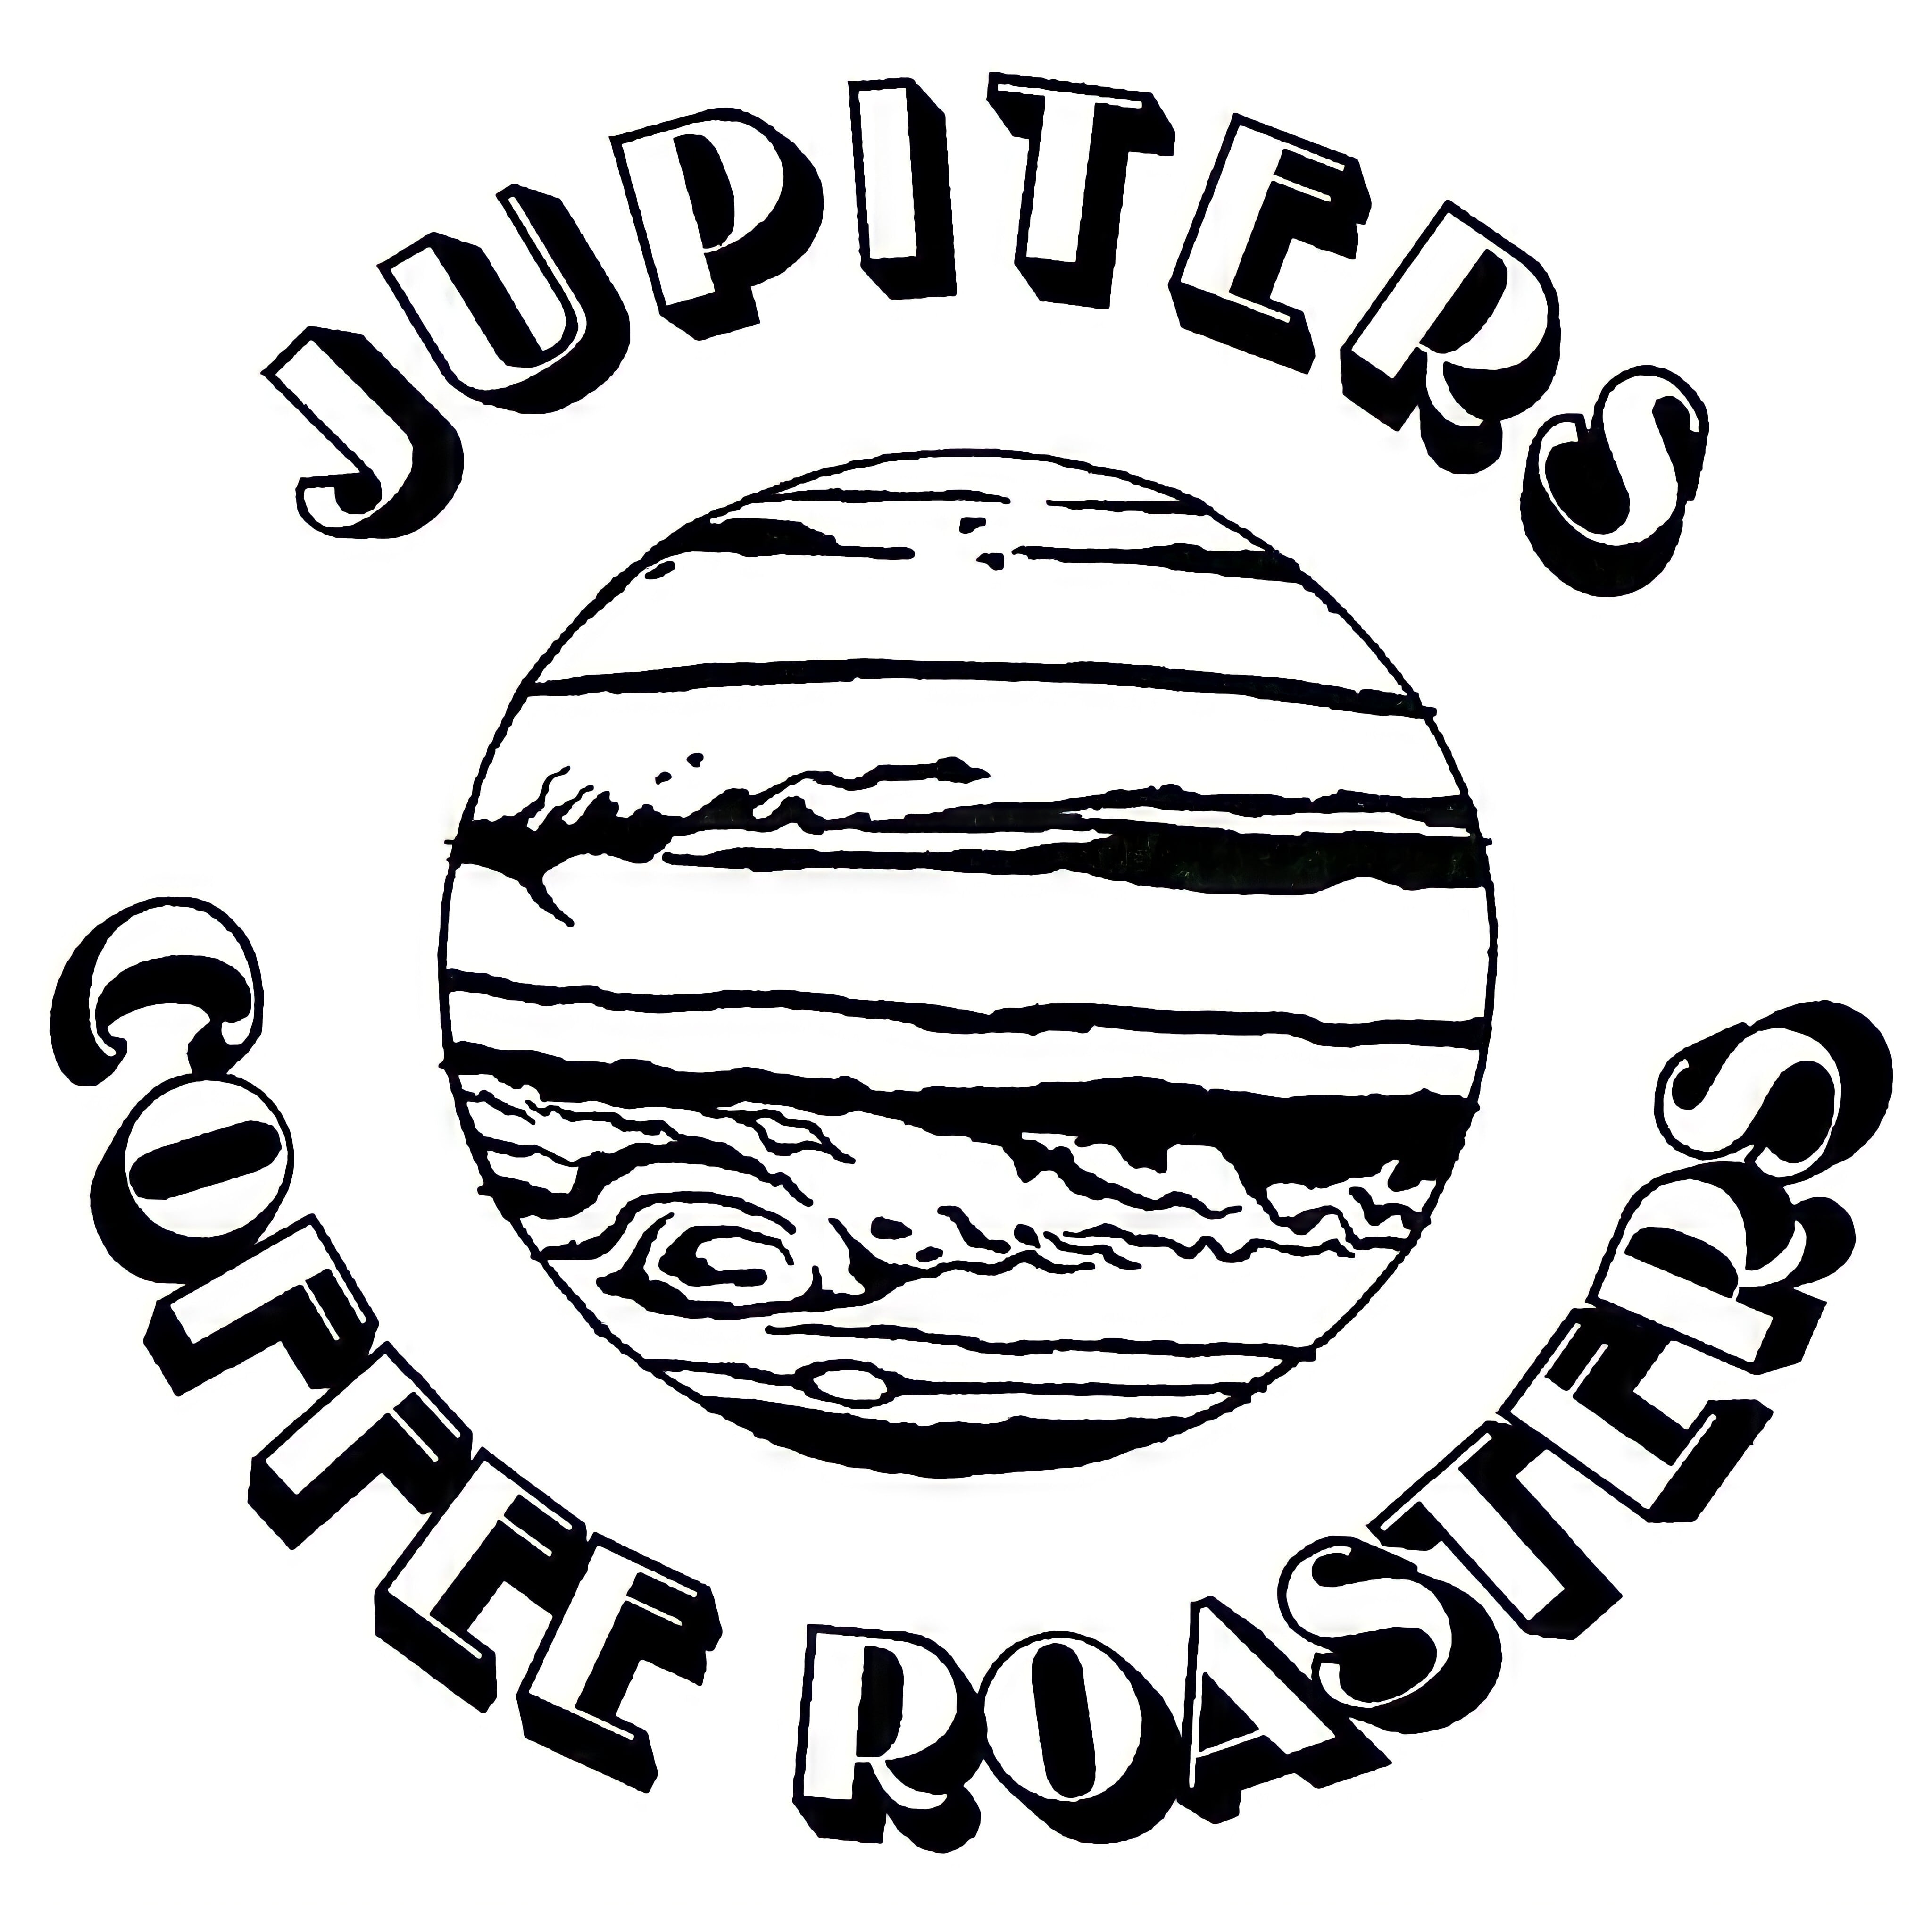 JUPITERS COFFEE ROASTERS